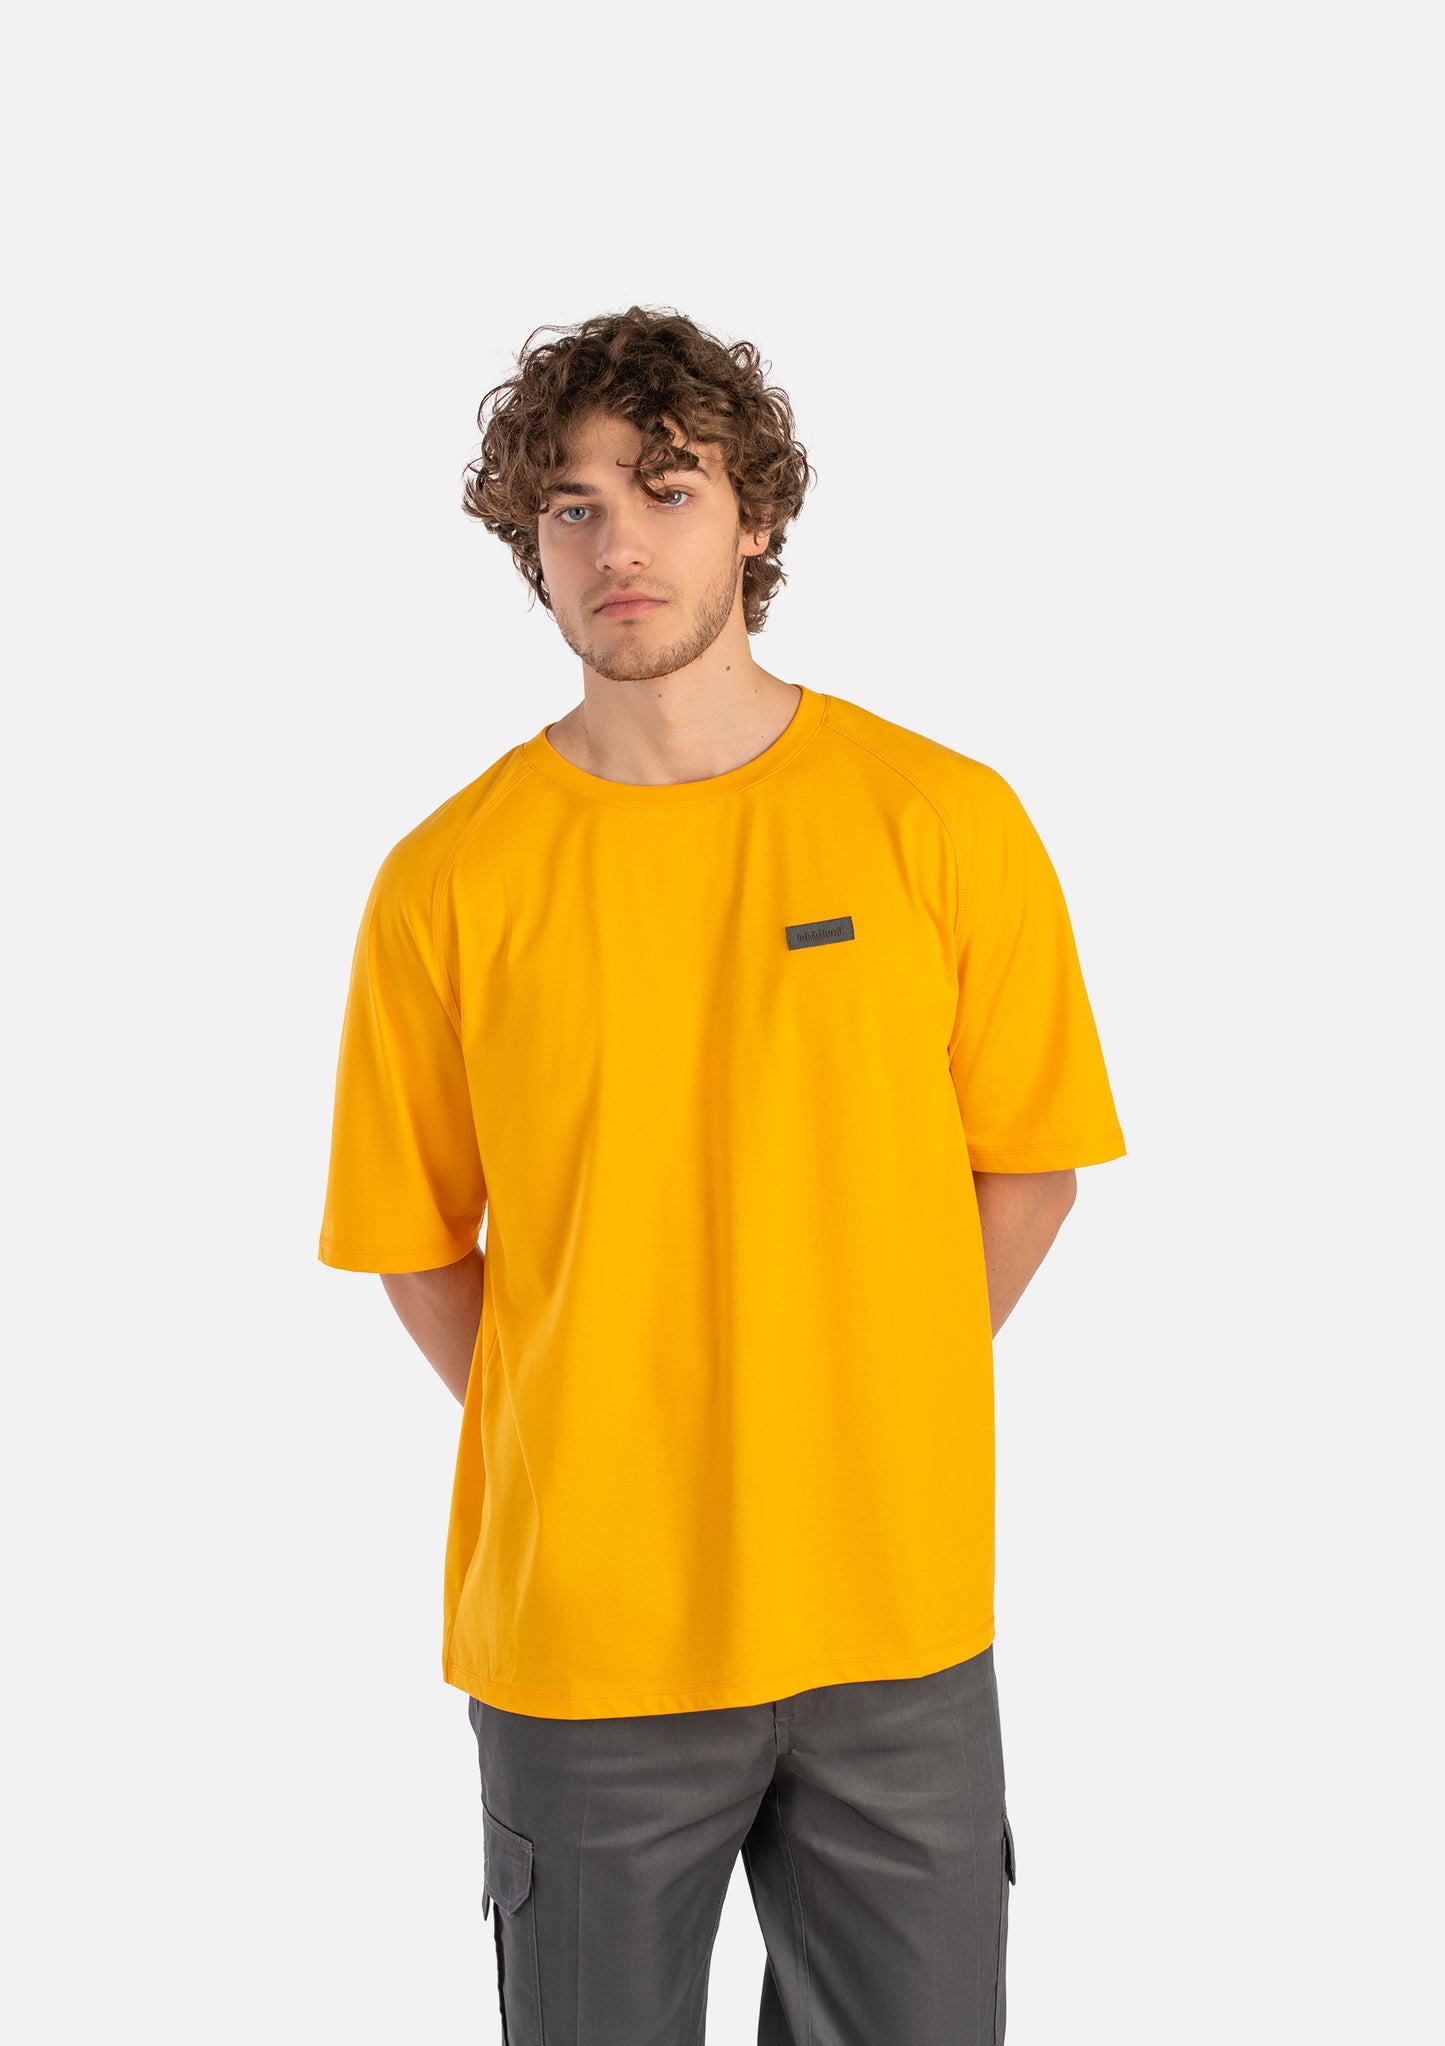 Minimal T-Shirt